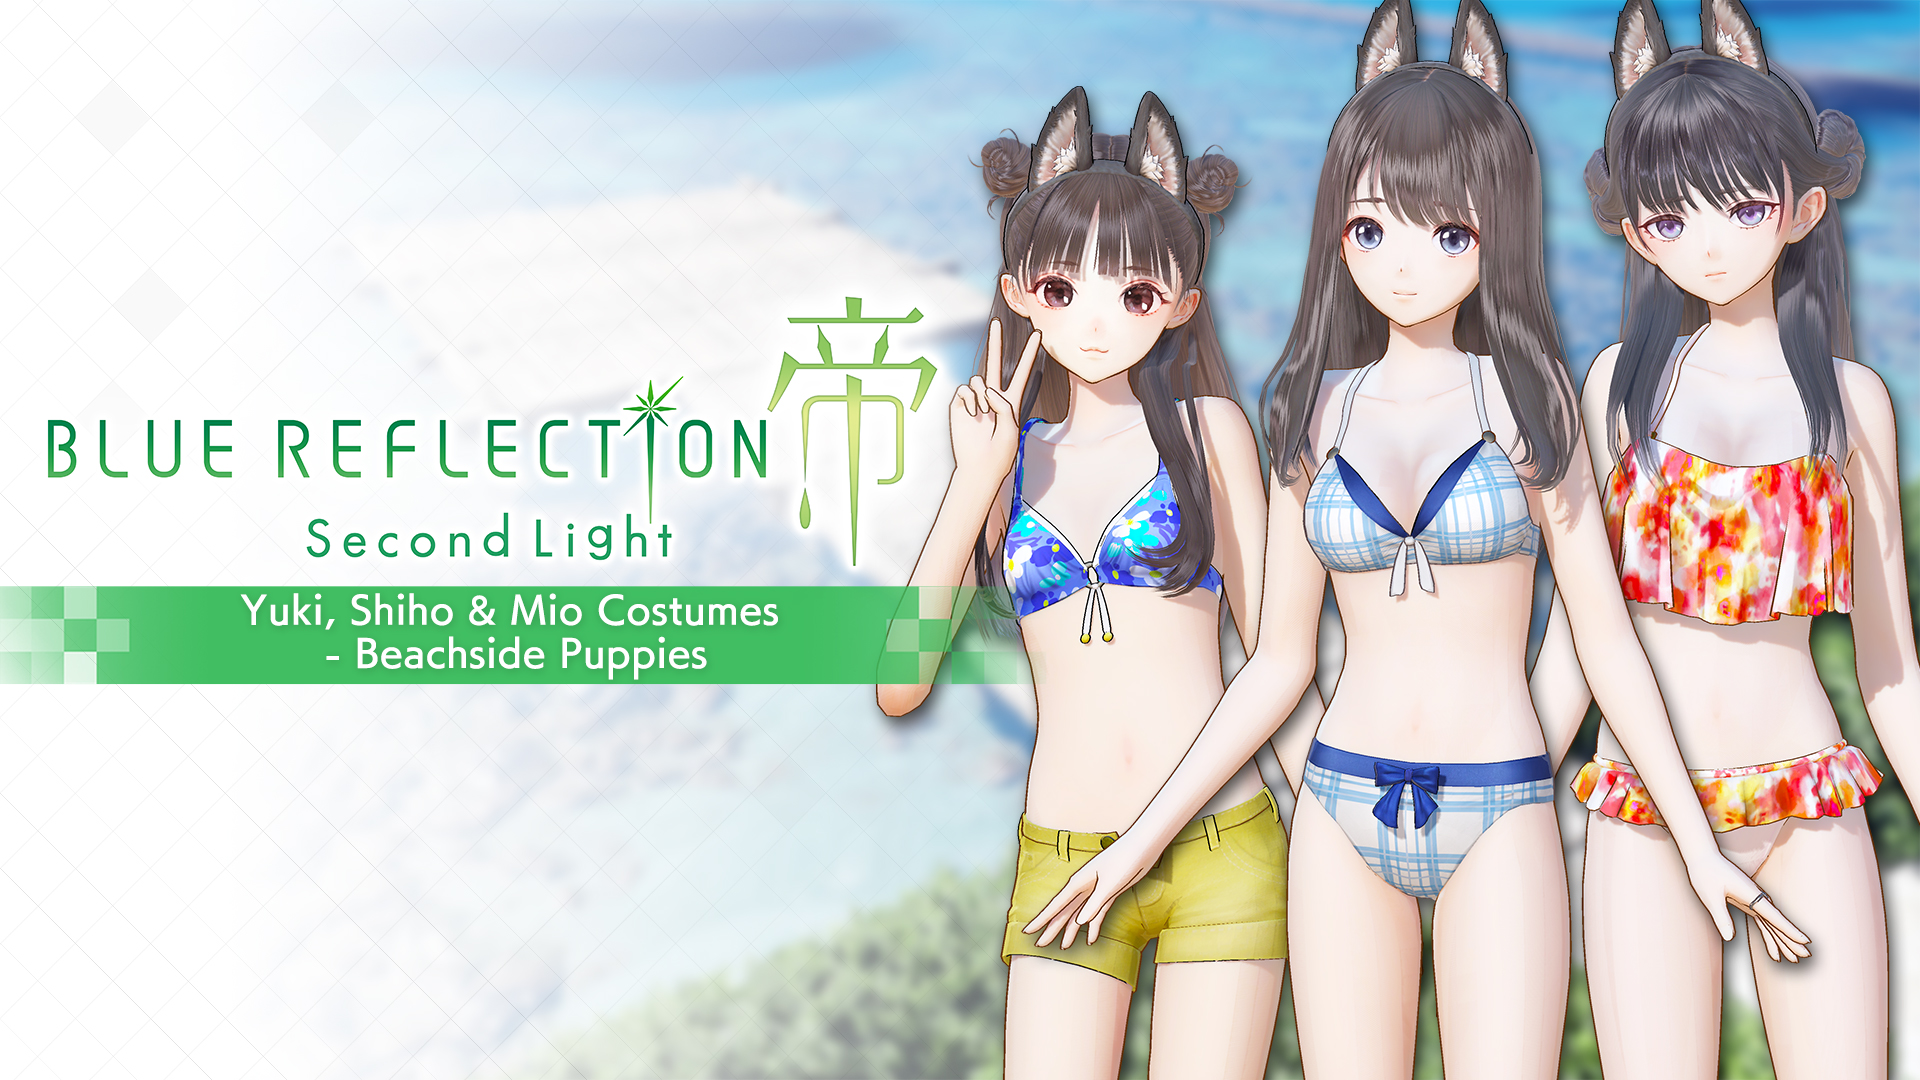 Yuki, Shiho & Mio Costumes - Beachside Puppies